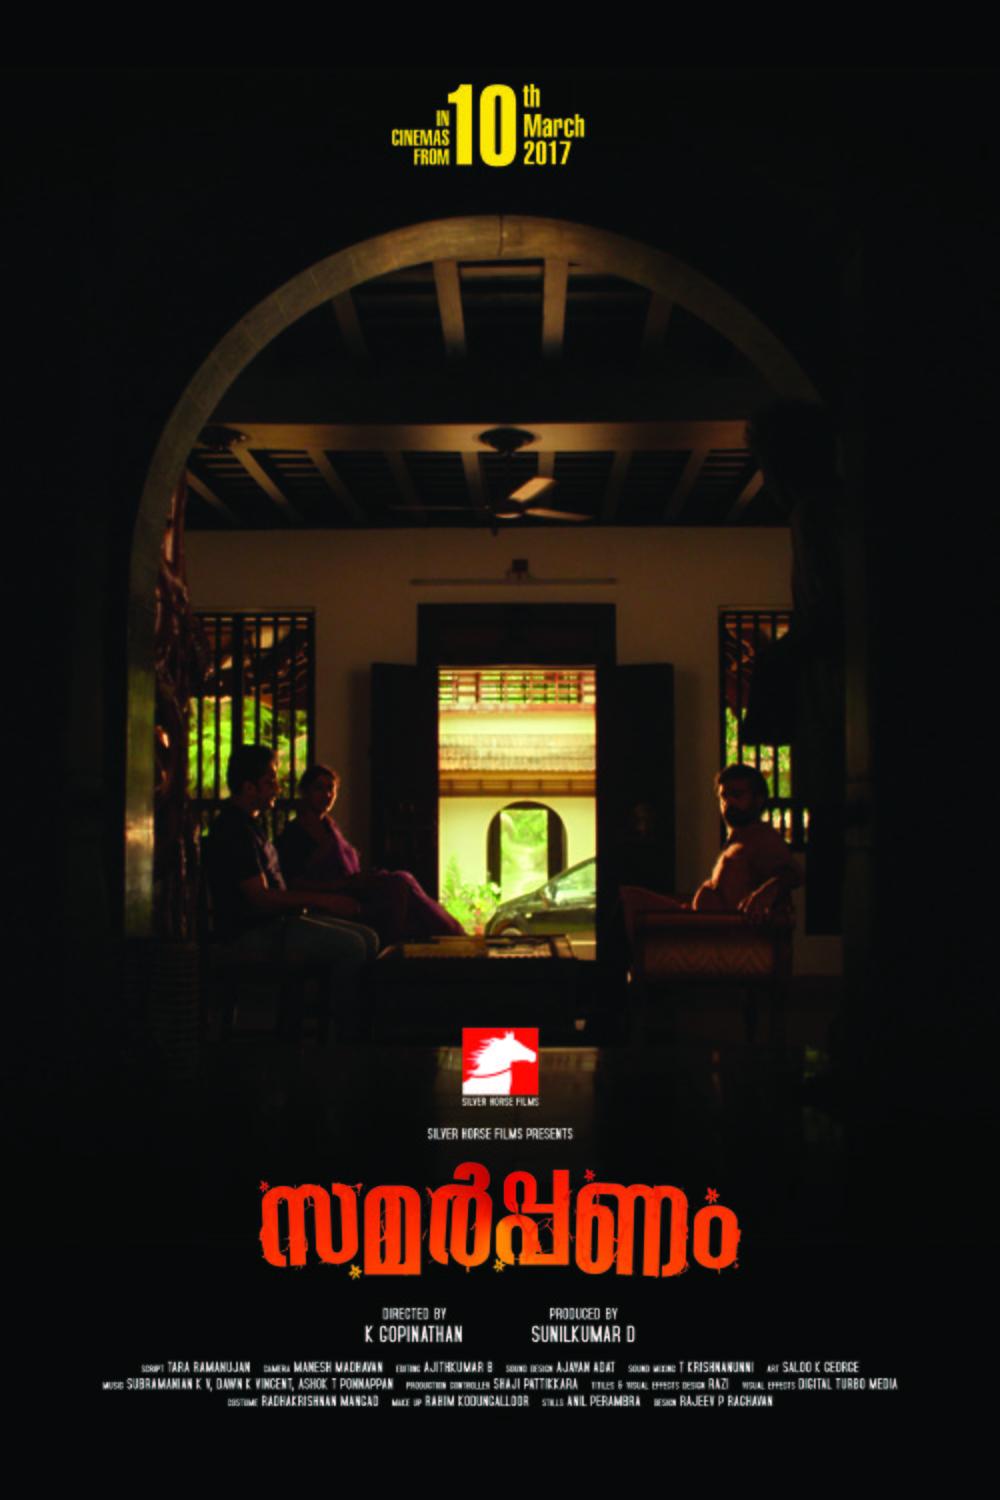 Malayalam poster of the movie Samarpanam